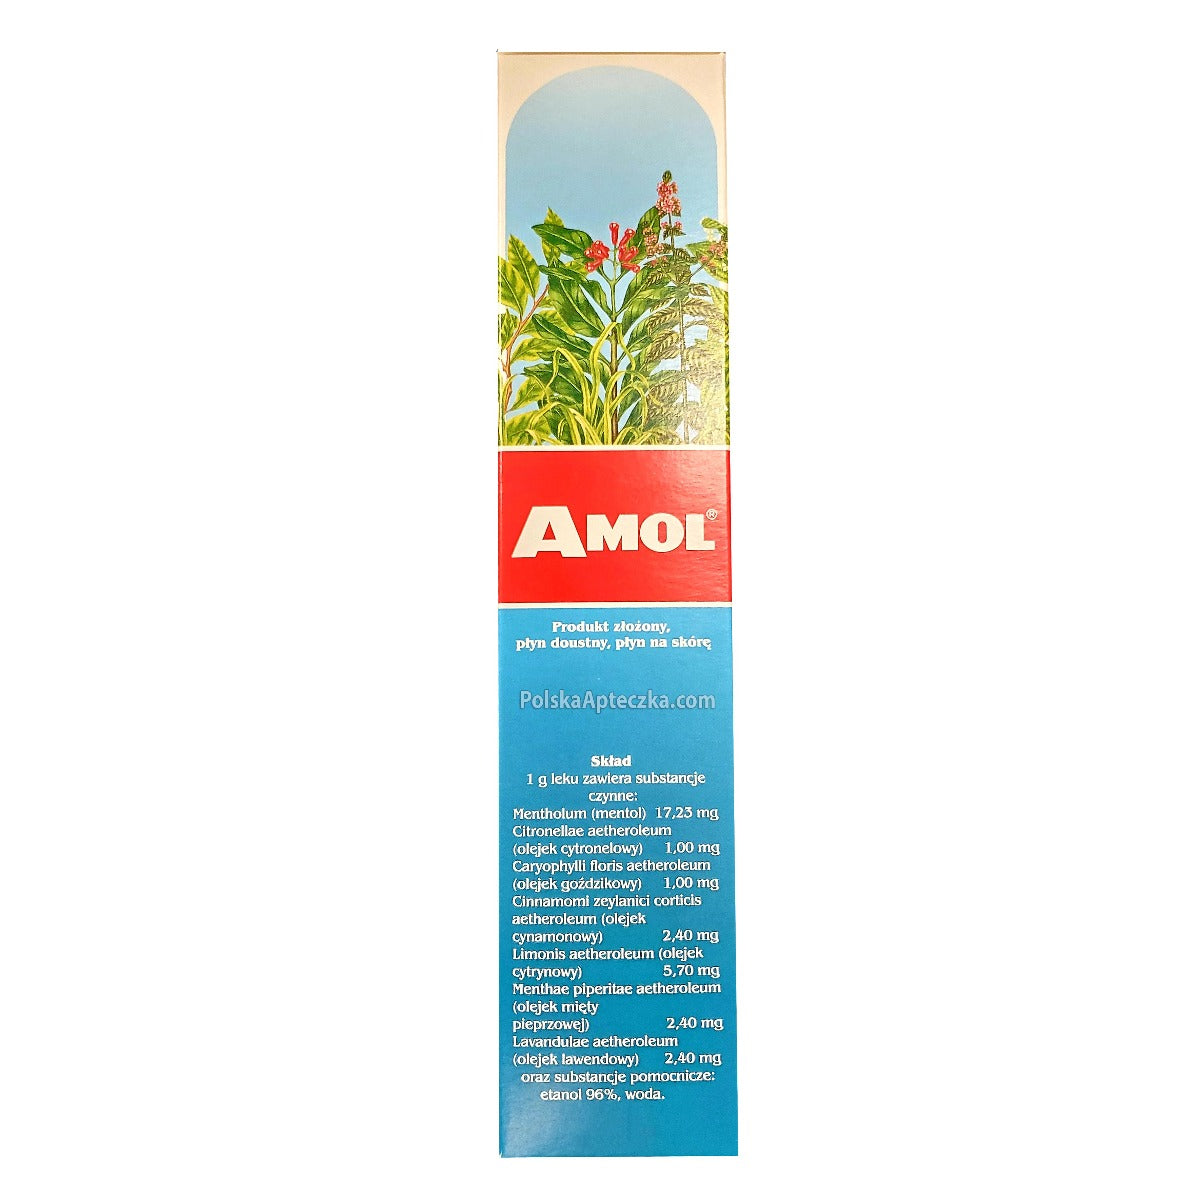 Amol liquid USA